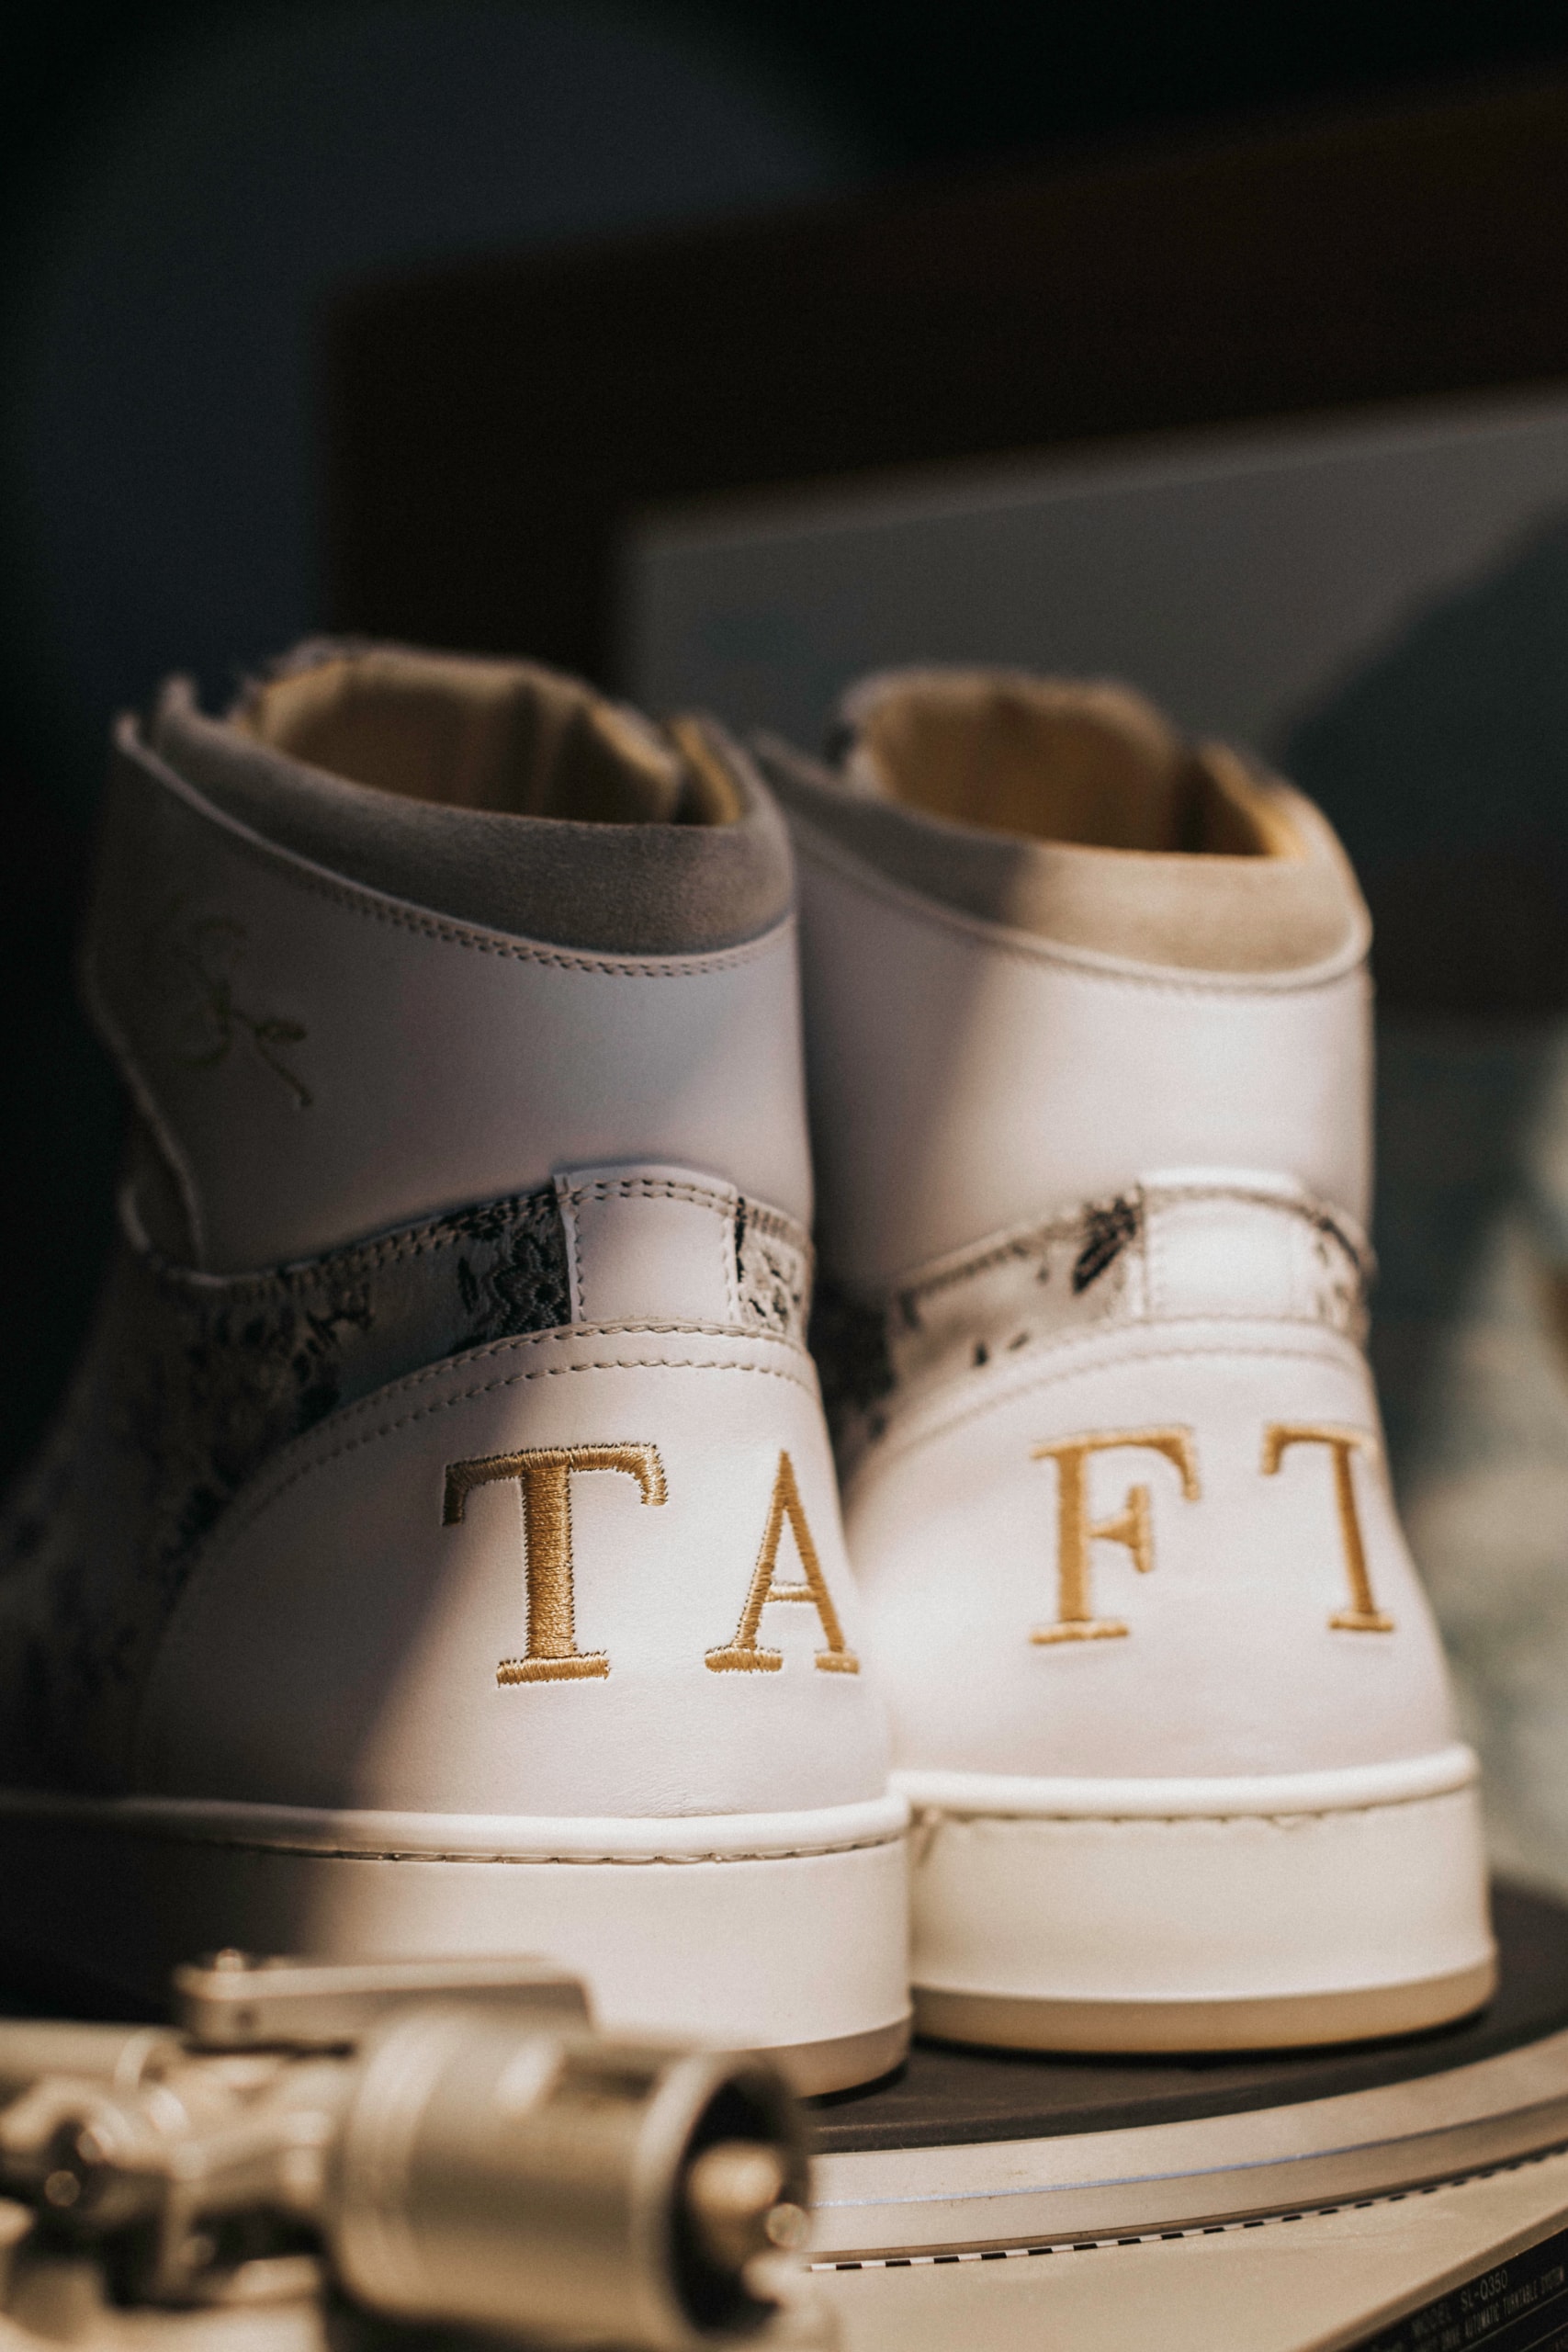 TAFT Footwear Rapido High-Top '80s Inspired Sneaker Collection